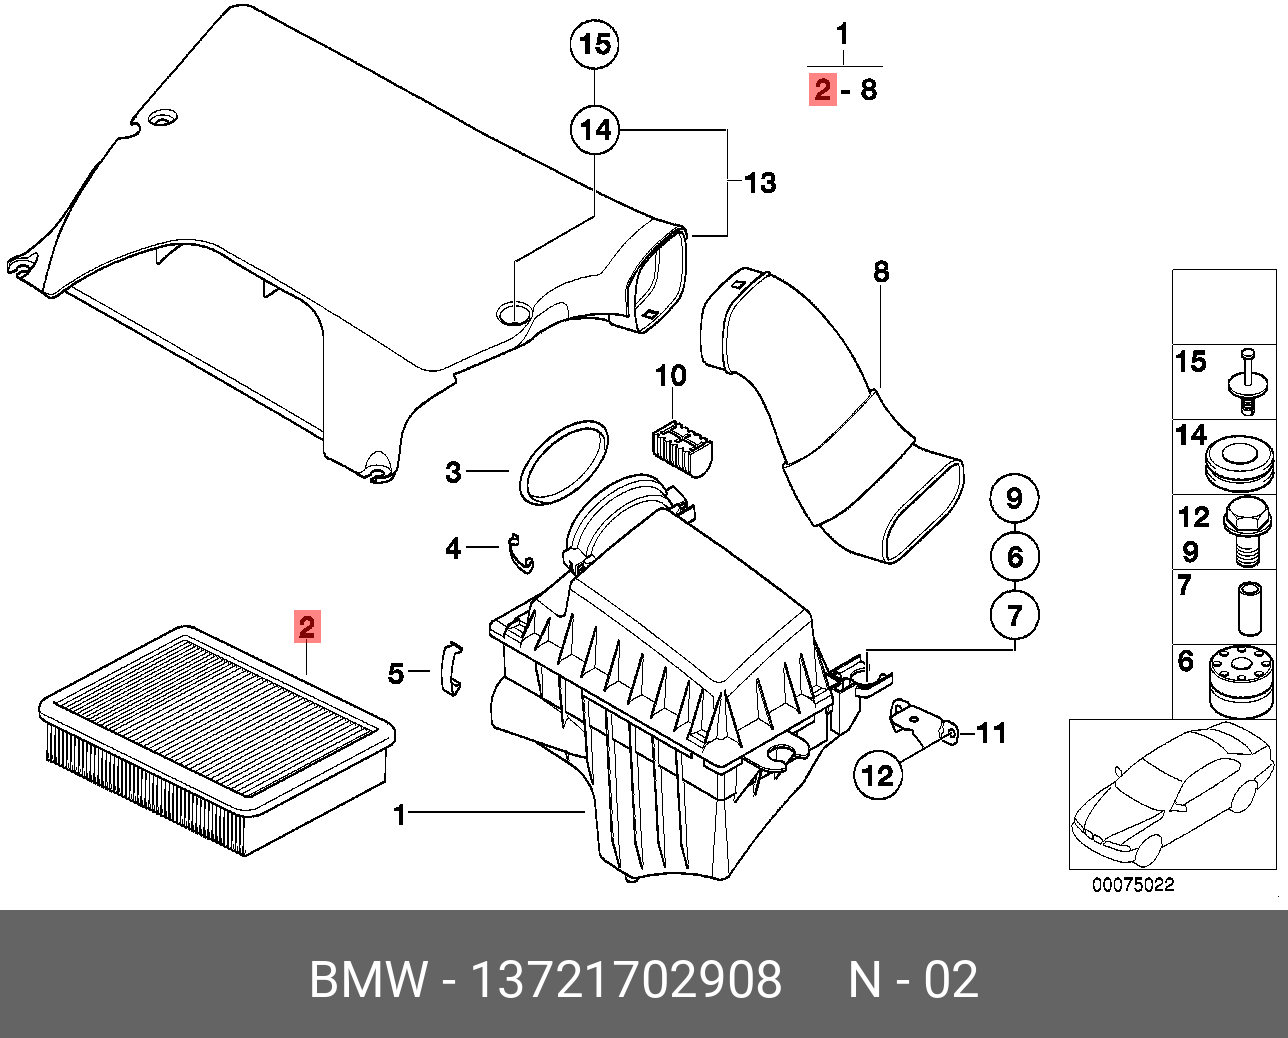 BMW x5 e53 3.0 фильтр воздушный. Воздушный фильтр БМВ х5 е53. Система воздушного фильтра БМВ х5 е53. Глушитель шума воздушного фильтра BMW b47.